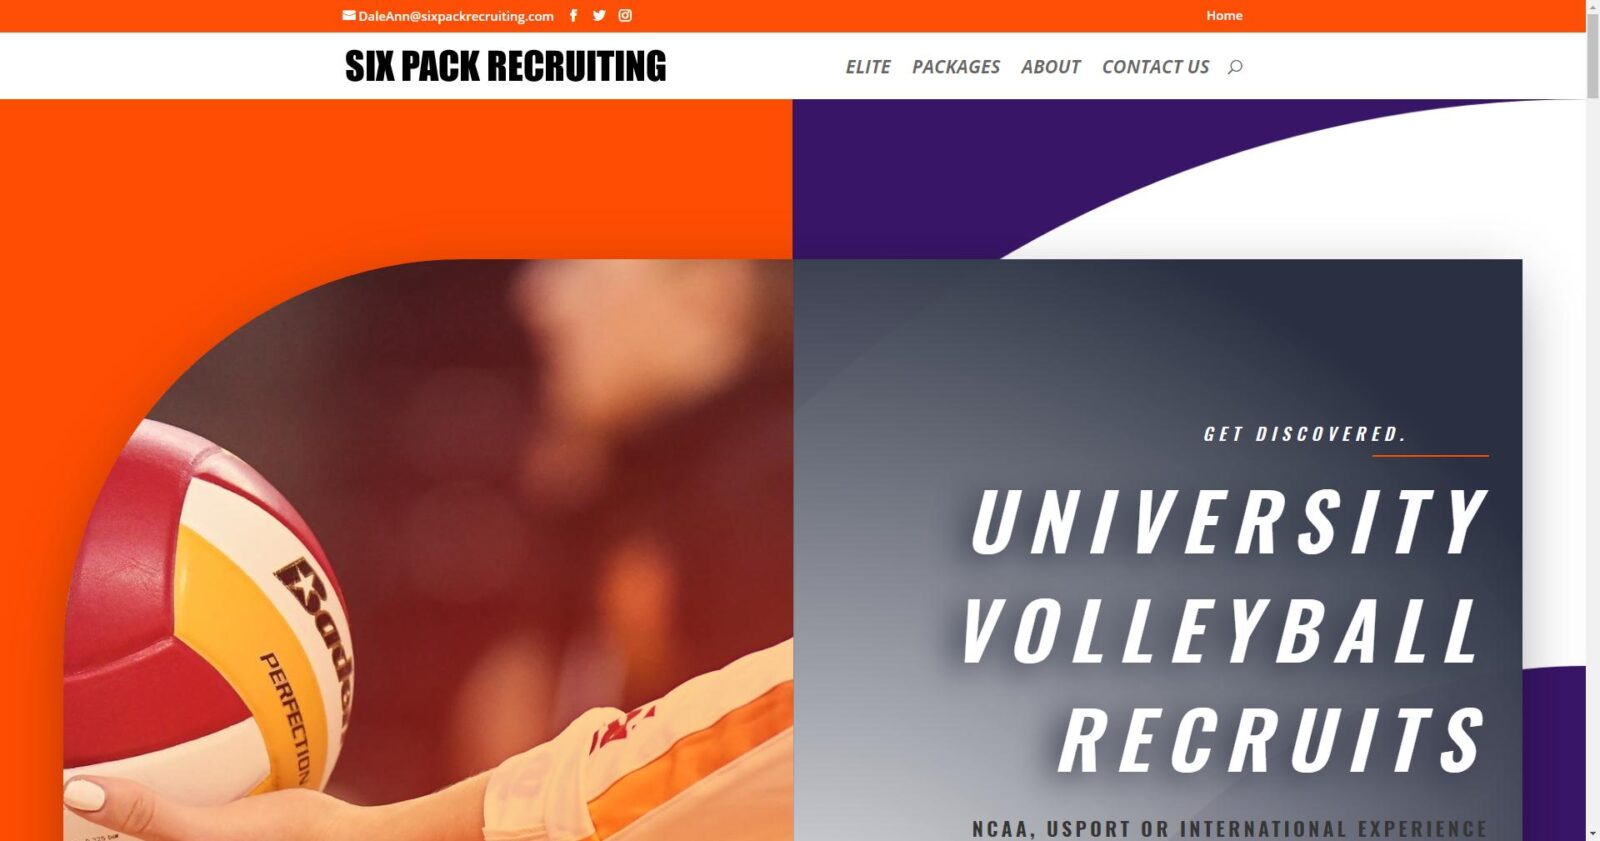 UNIVERSITY VOLLEYBALL RECRUITS NCAA, USPORT OR INTERNATIONAL EXPERIENCE